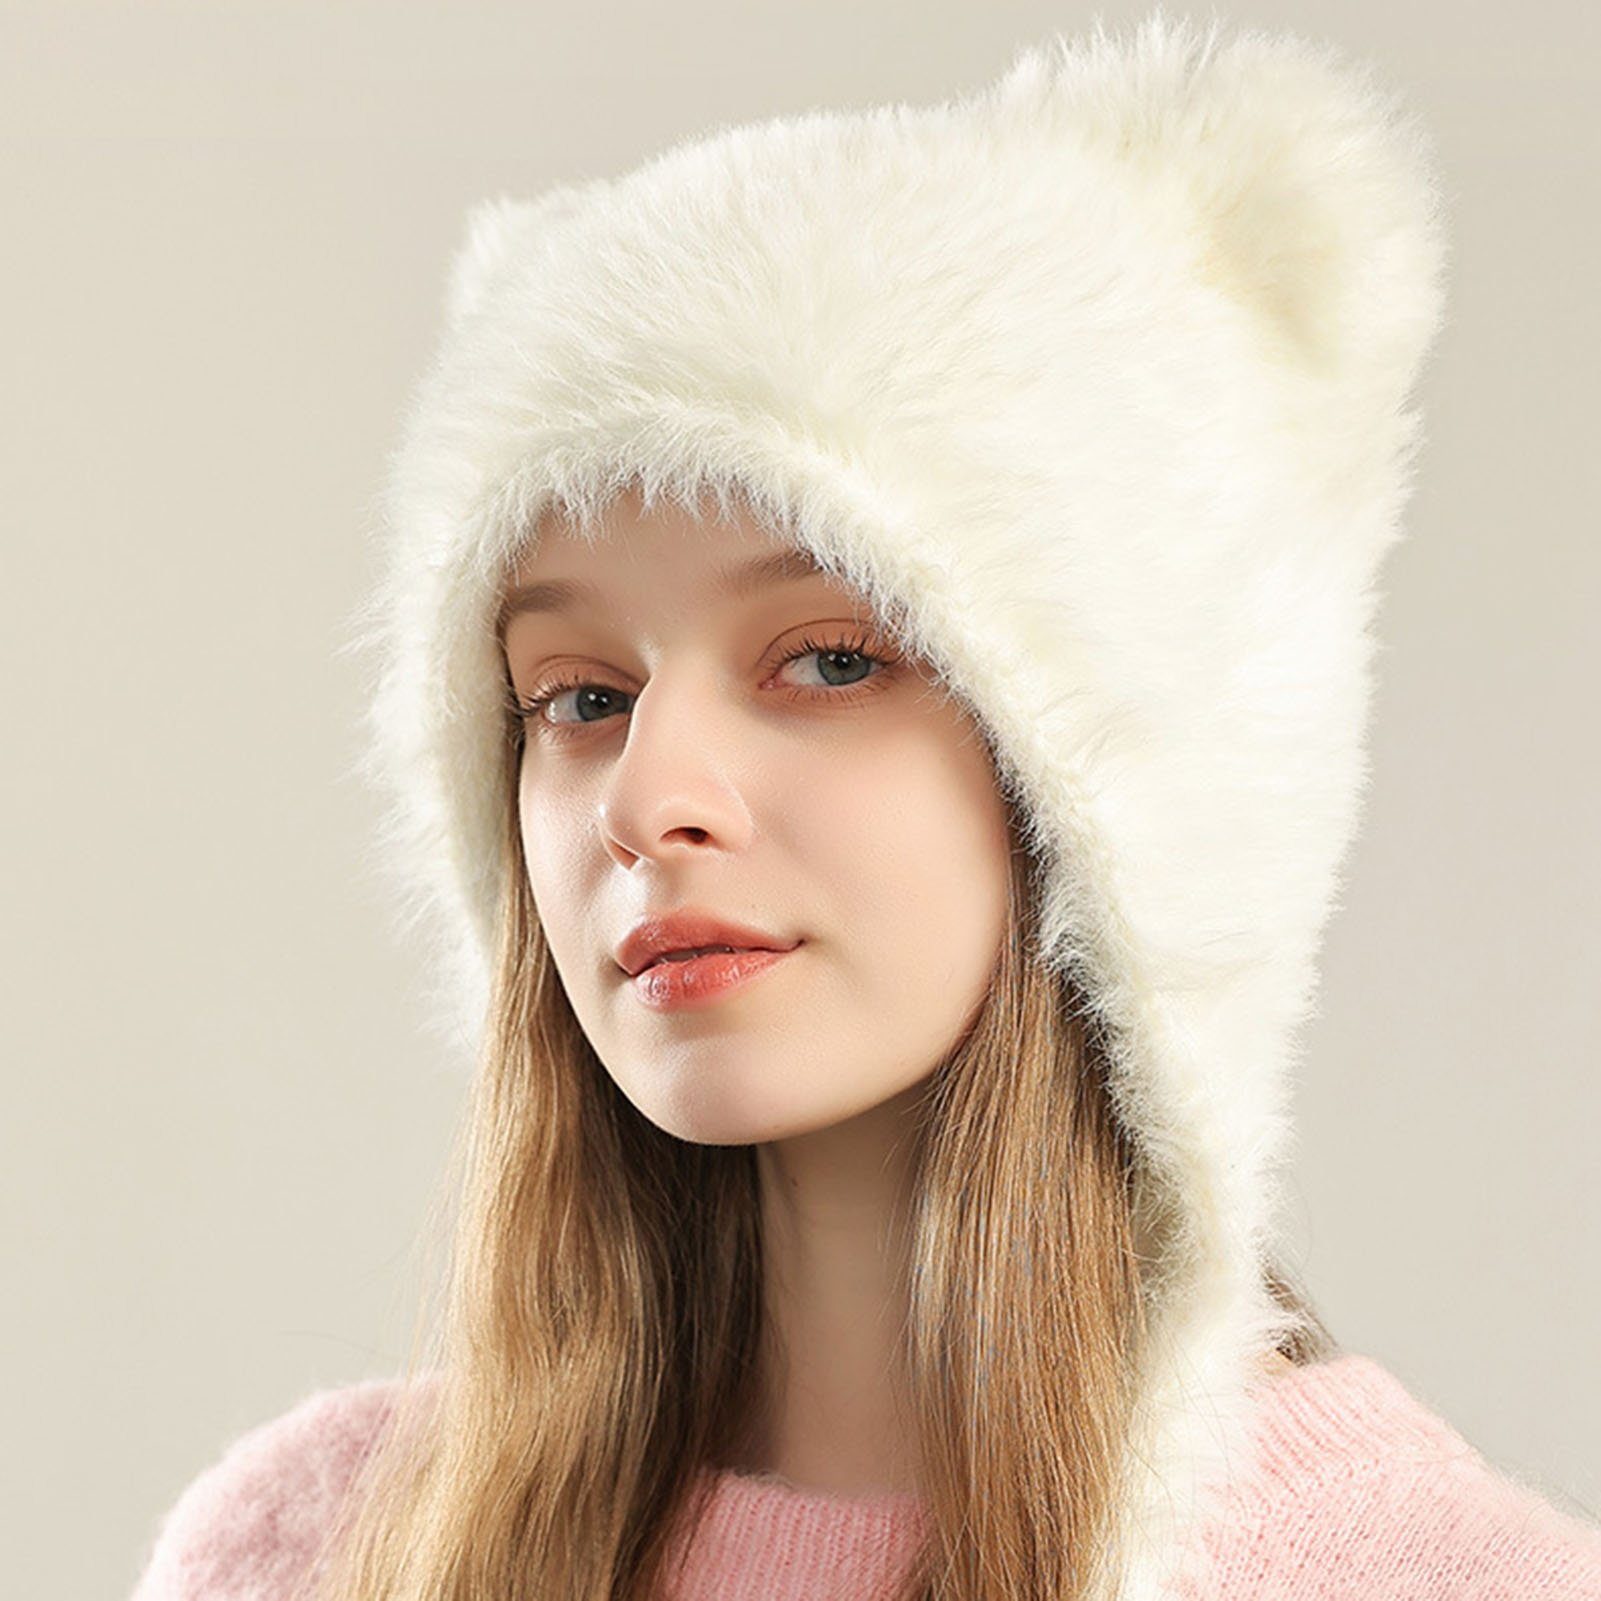 Rutaqian Fellimitatmützen Wintermützen für Frauen Kunstpelz Beanie Hut (Cartoon Haar Katzenohren Pullover Hut) Weiß